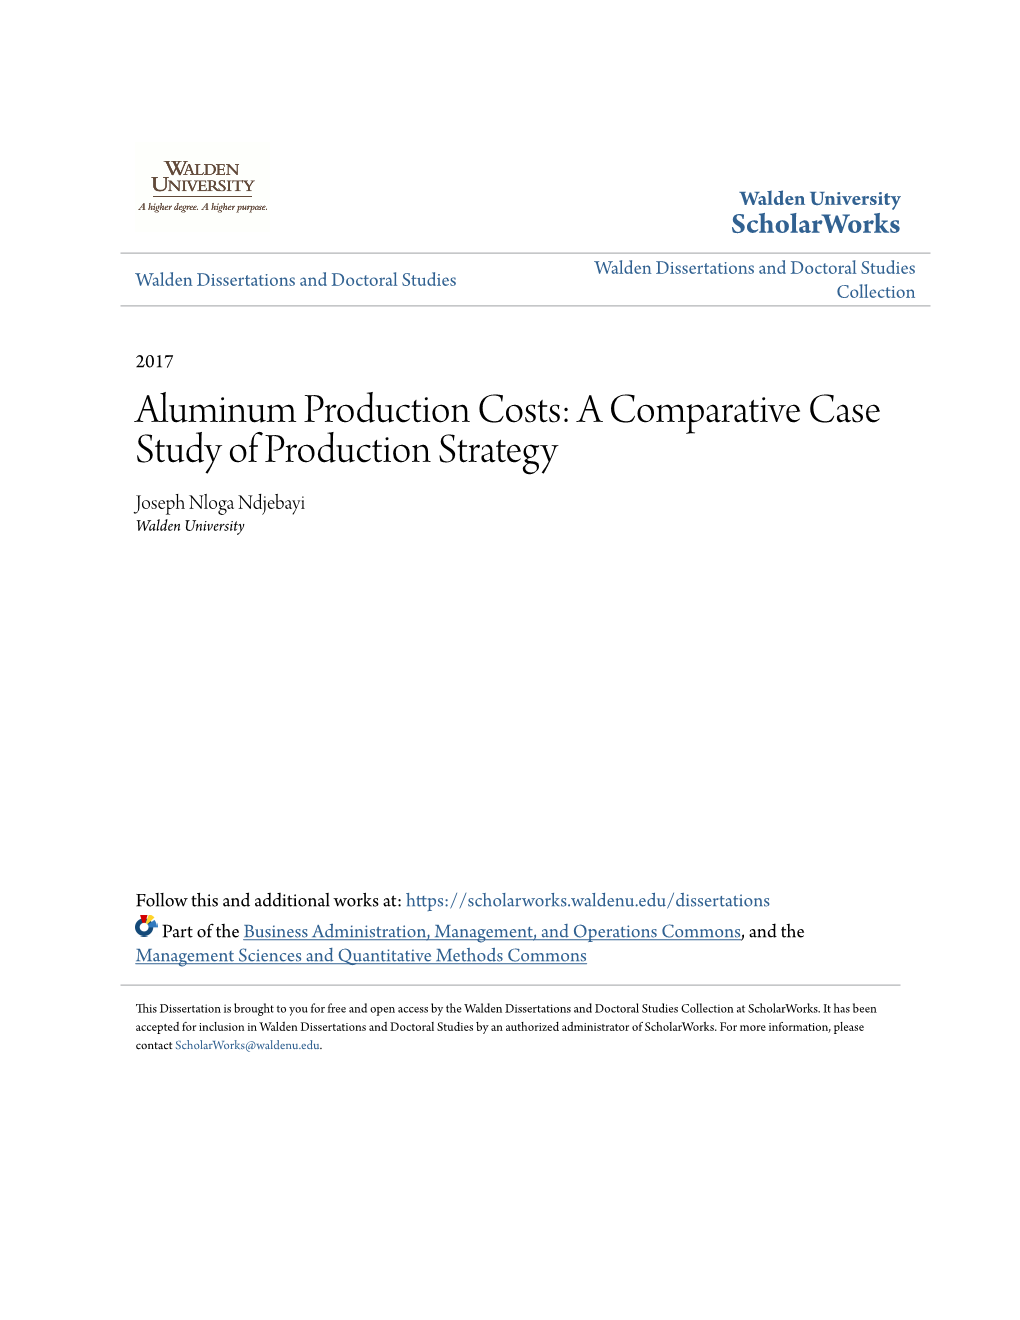 Aluminum Production Costs: a Comparative Case Study of Production Strategy Joseph Nloga Ndjebayi Walden University